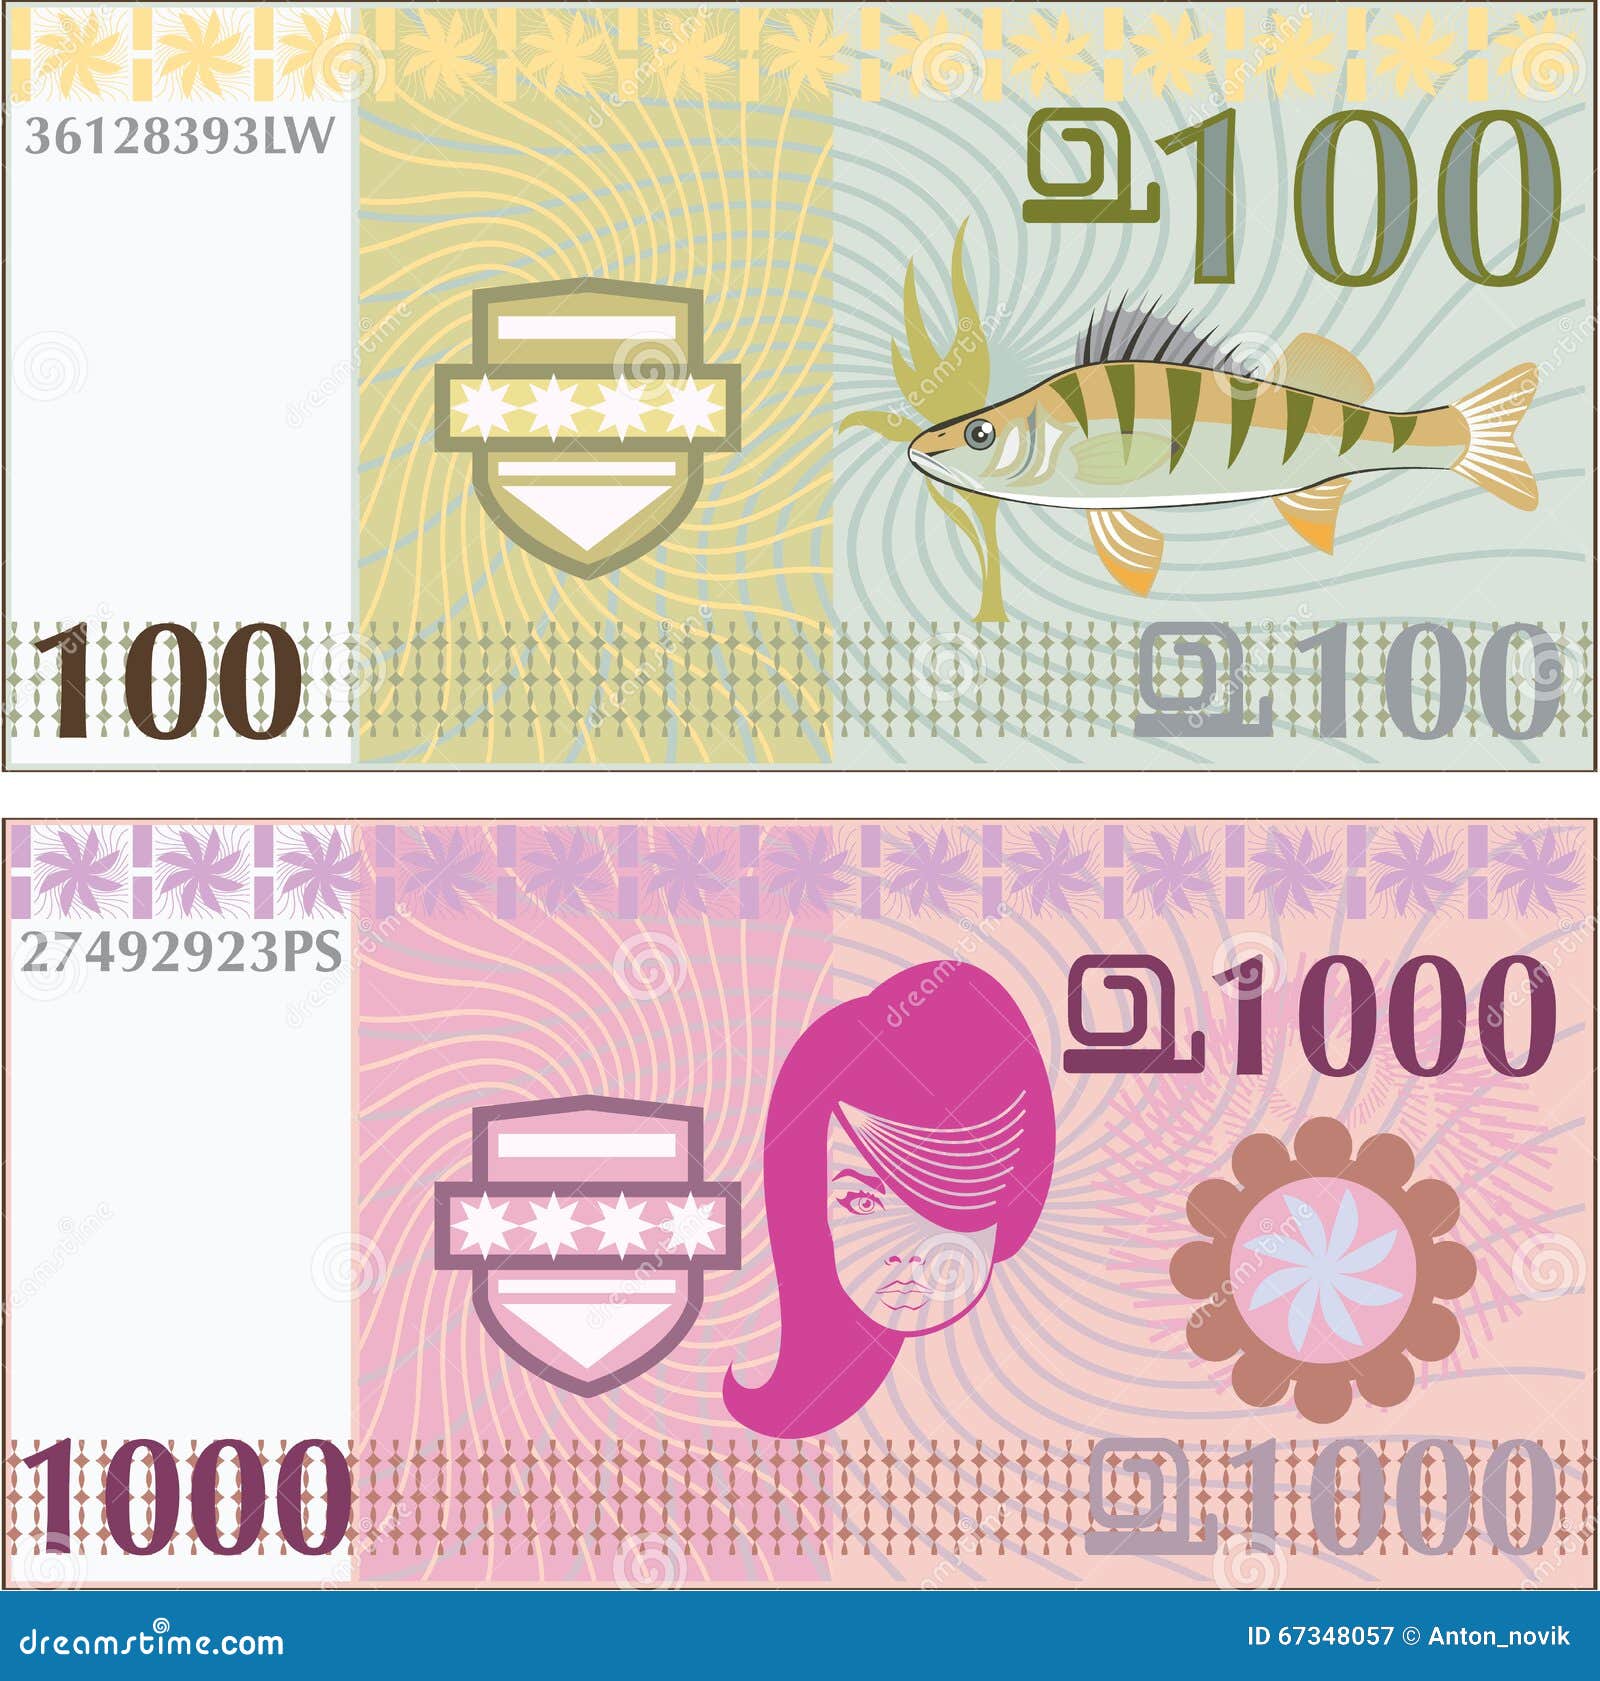 clipart of fake money - photo #39